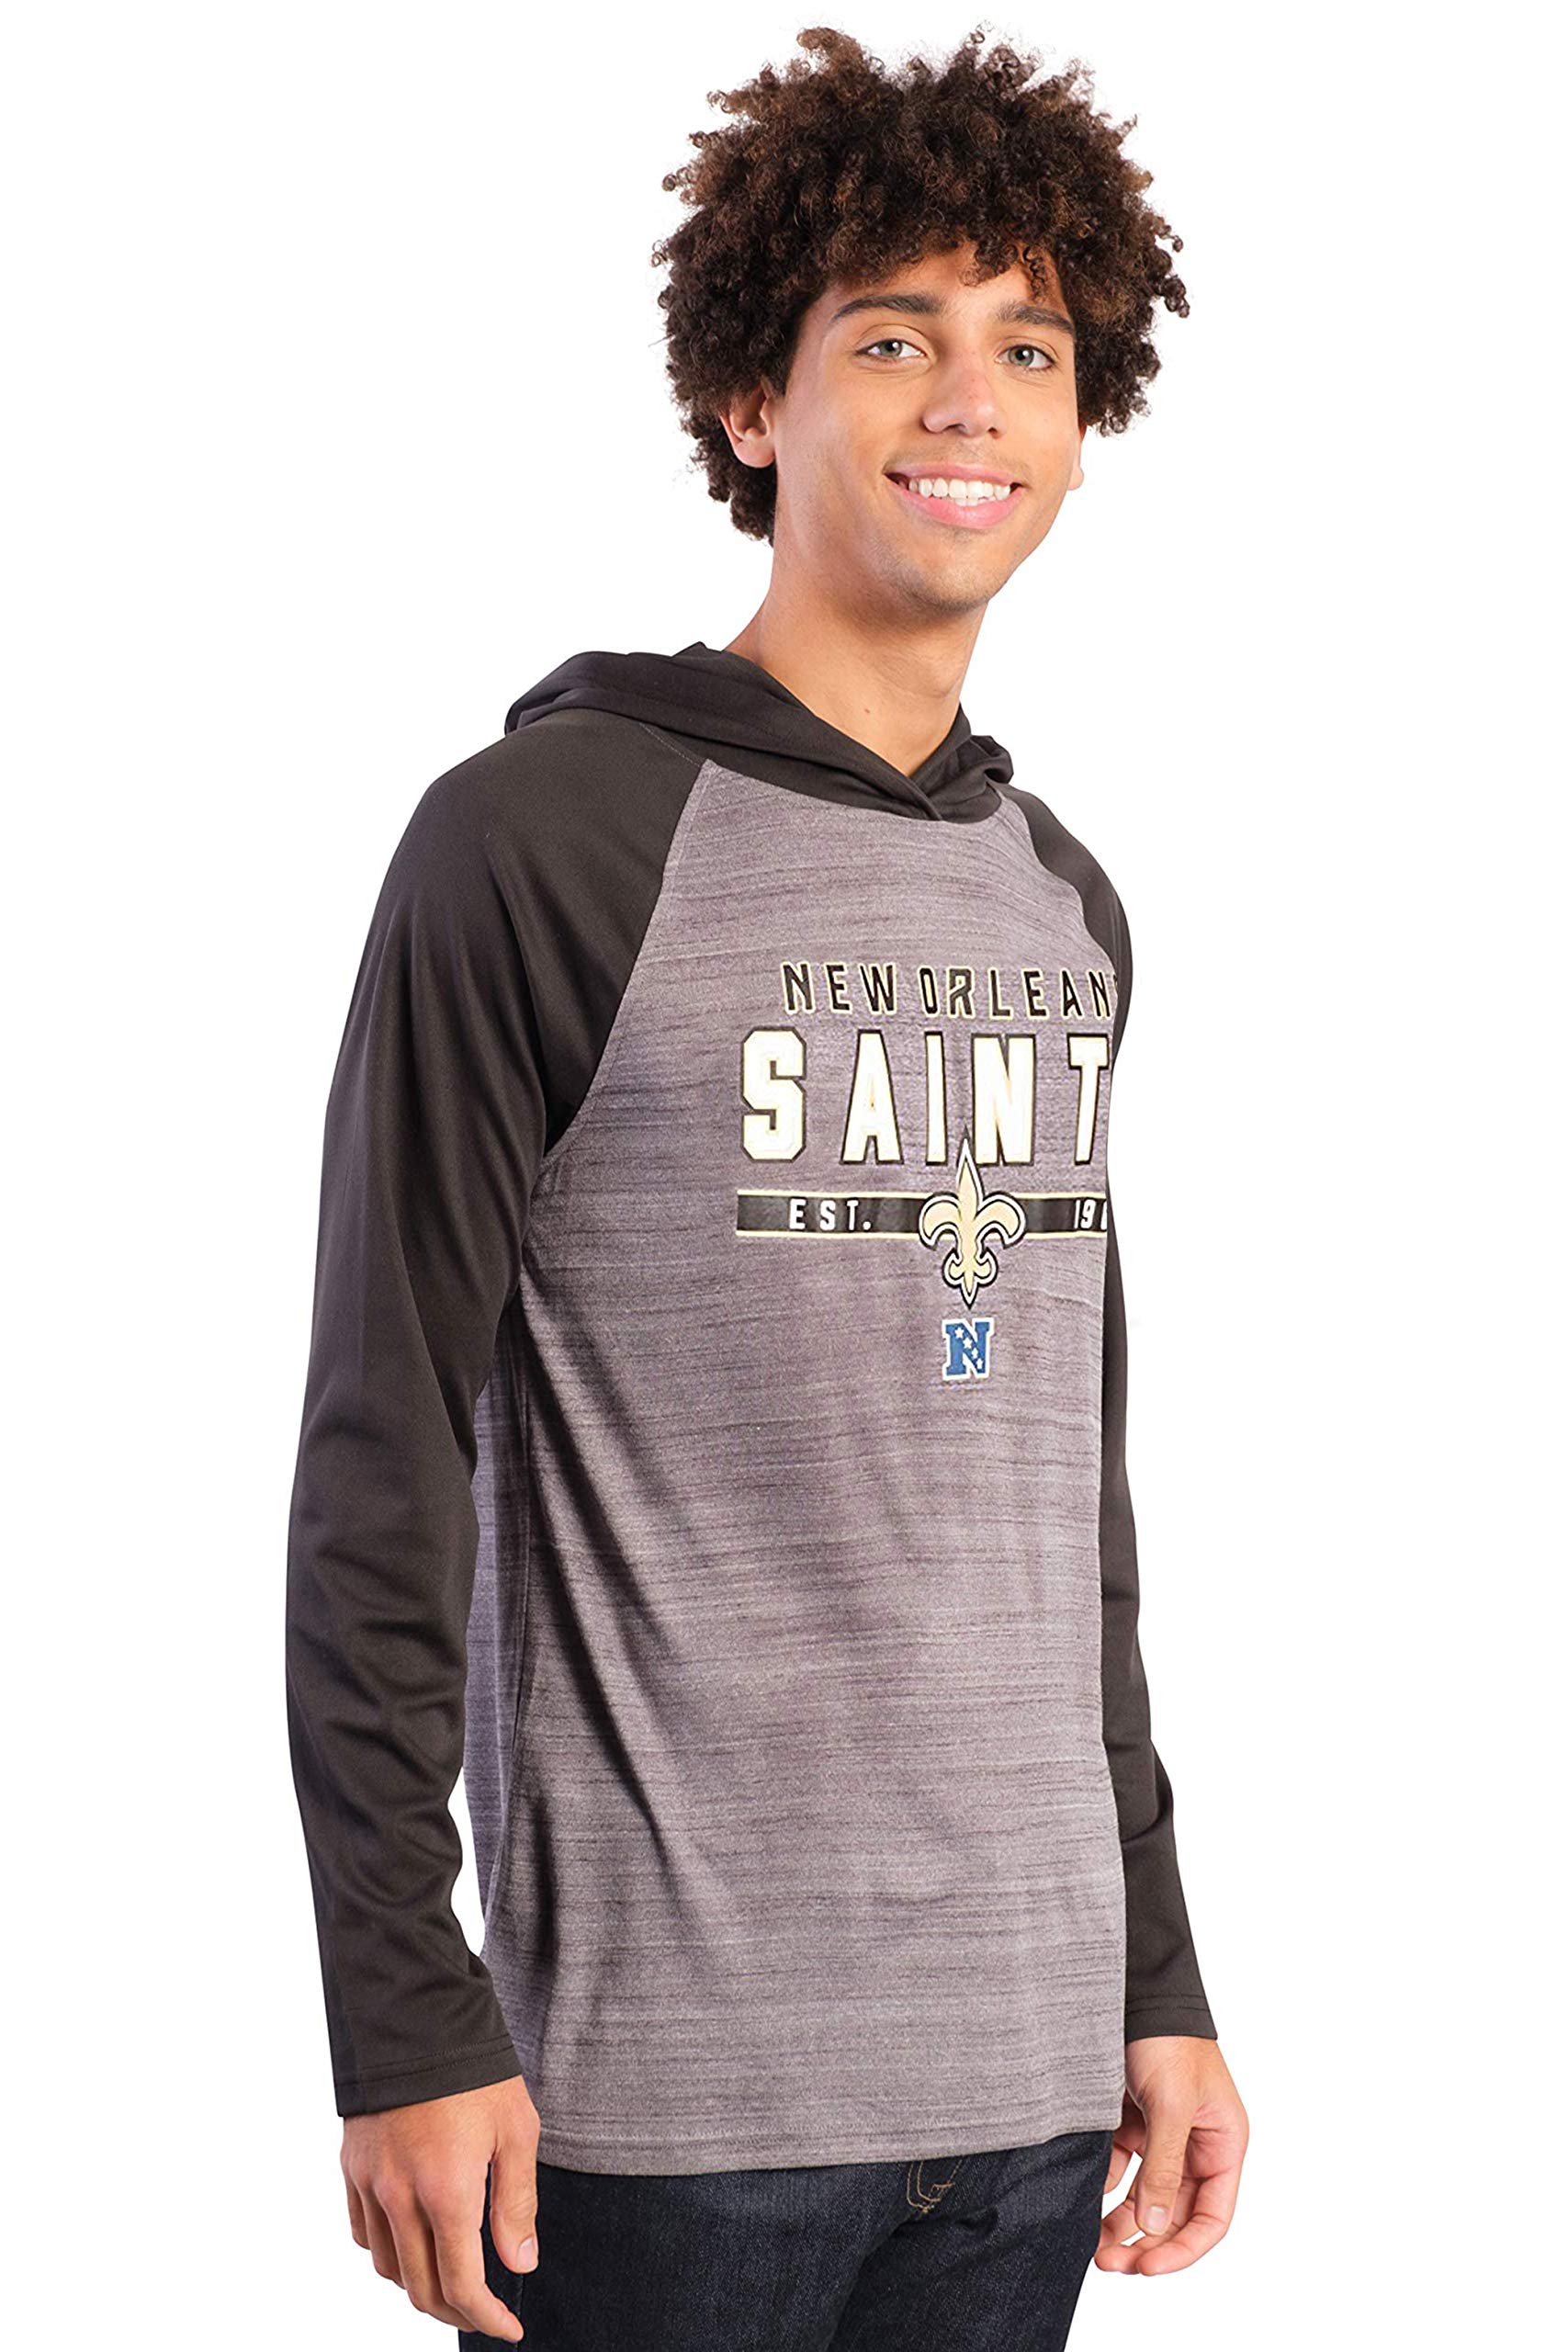 Ultra Game NFL New Orleans Saints Mens Athletic Performance Soft Pullover Lightweight Hoodie Sweatshirt|New Orleans Saints